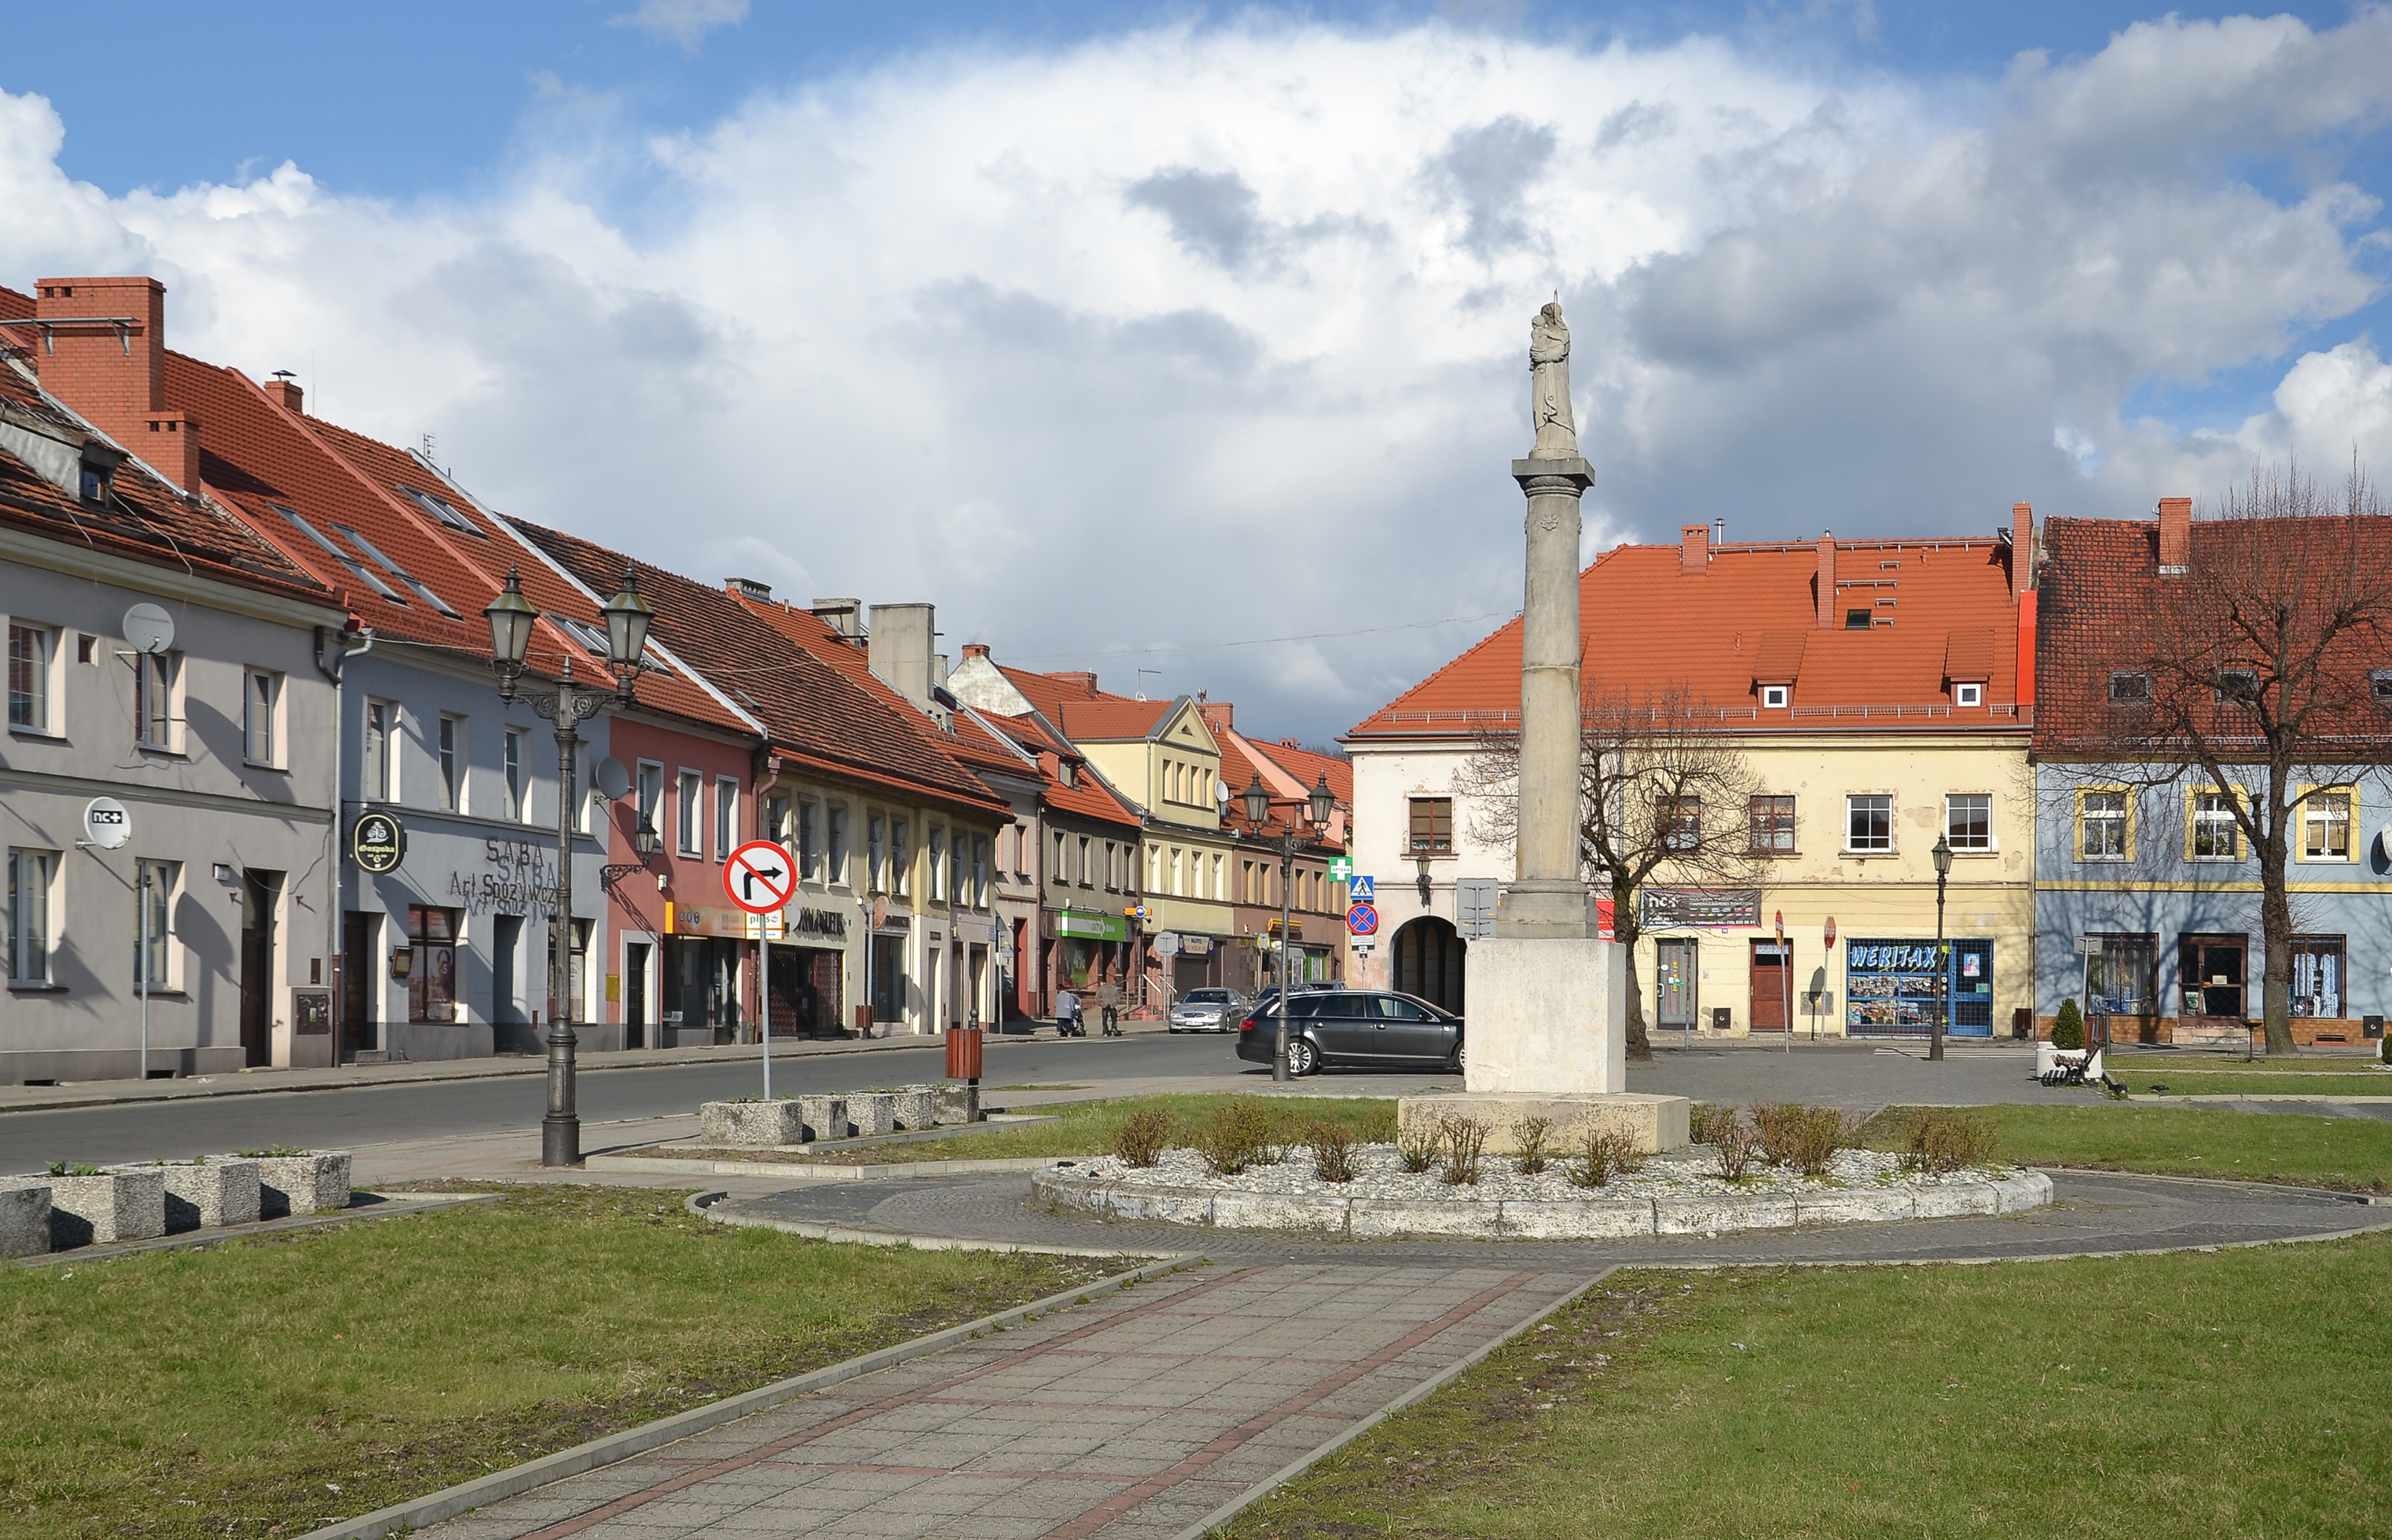 Pyskowice (Peiskretscham) - market square